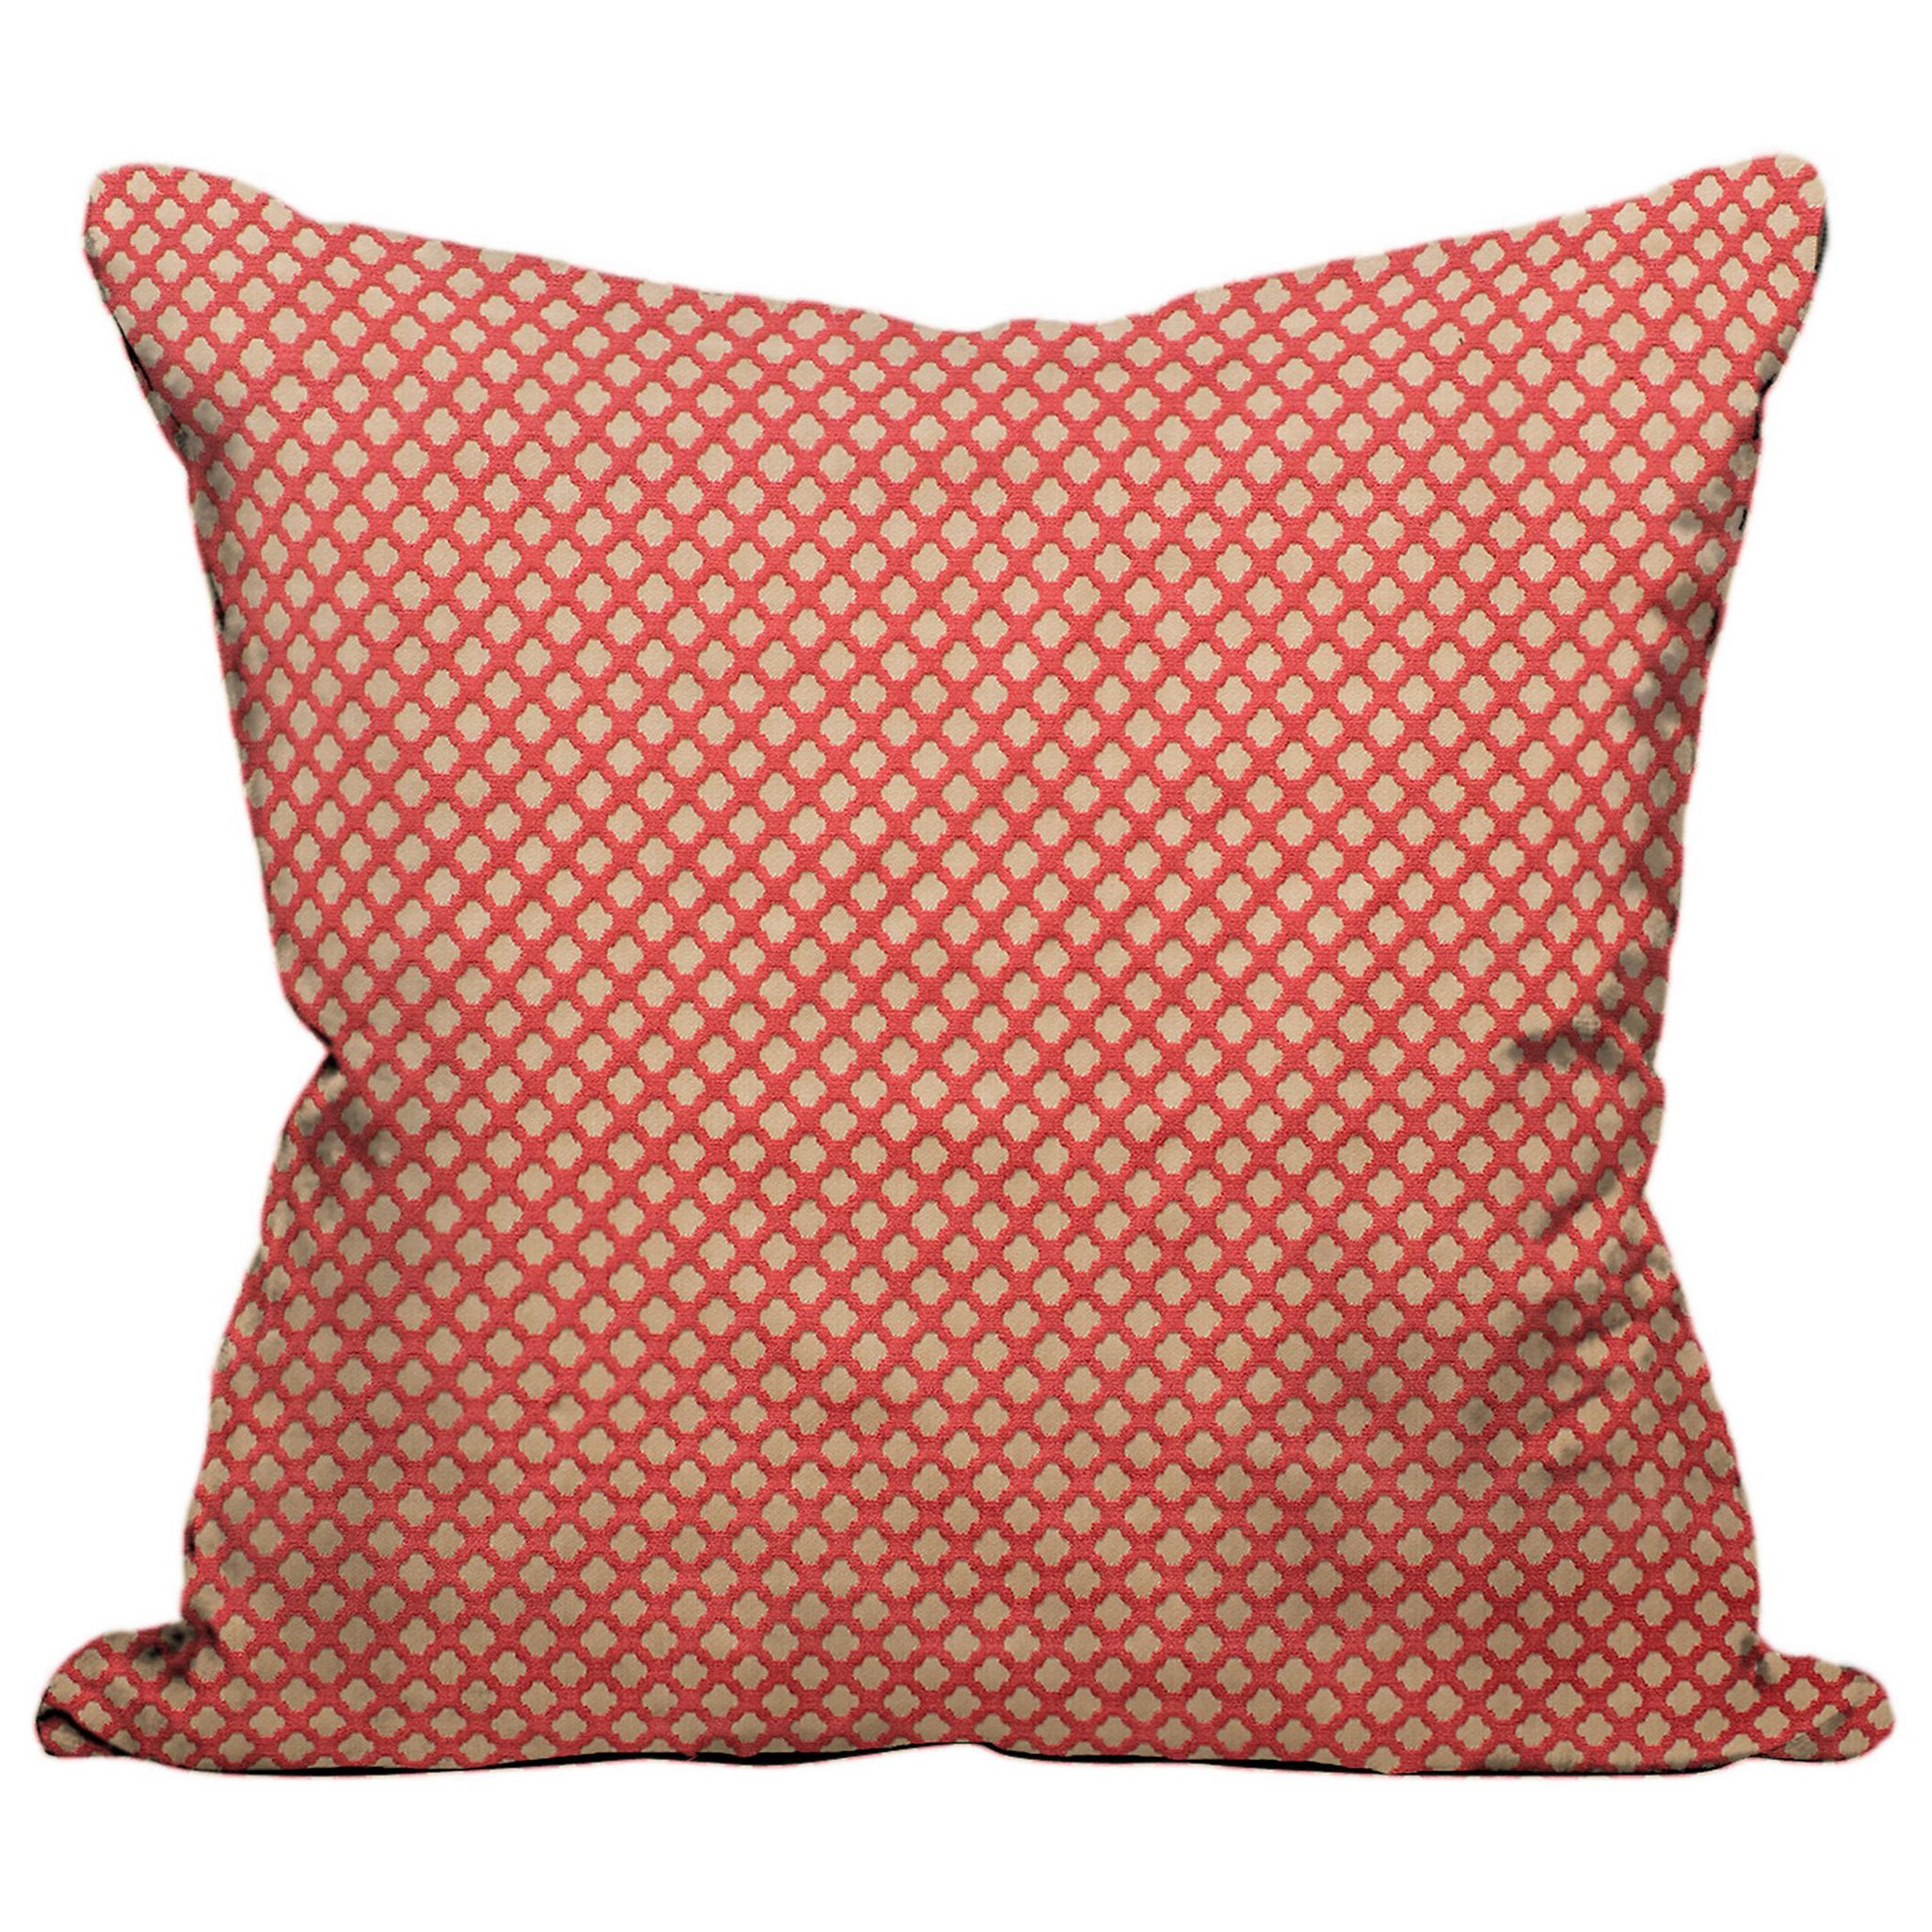 Pomfret Pillow For Sale